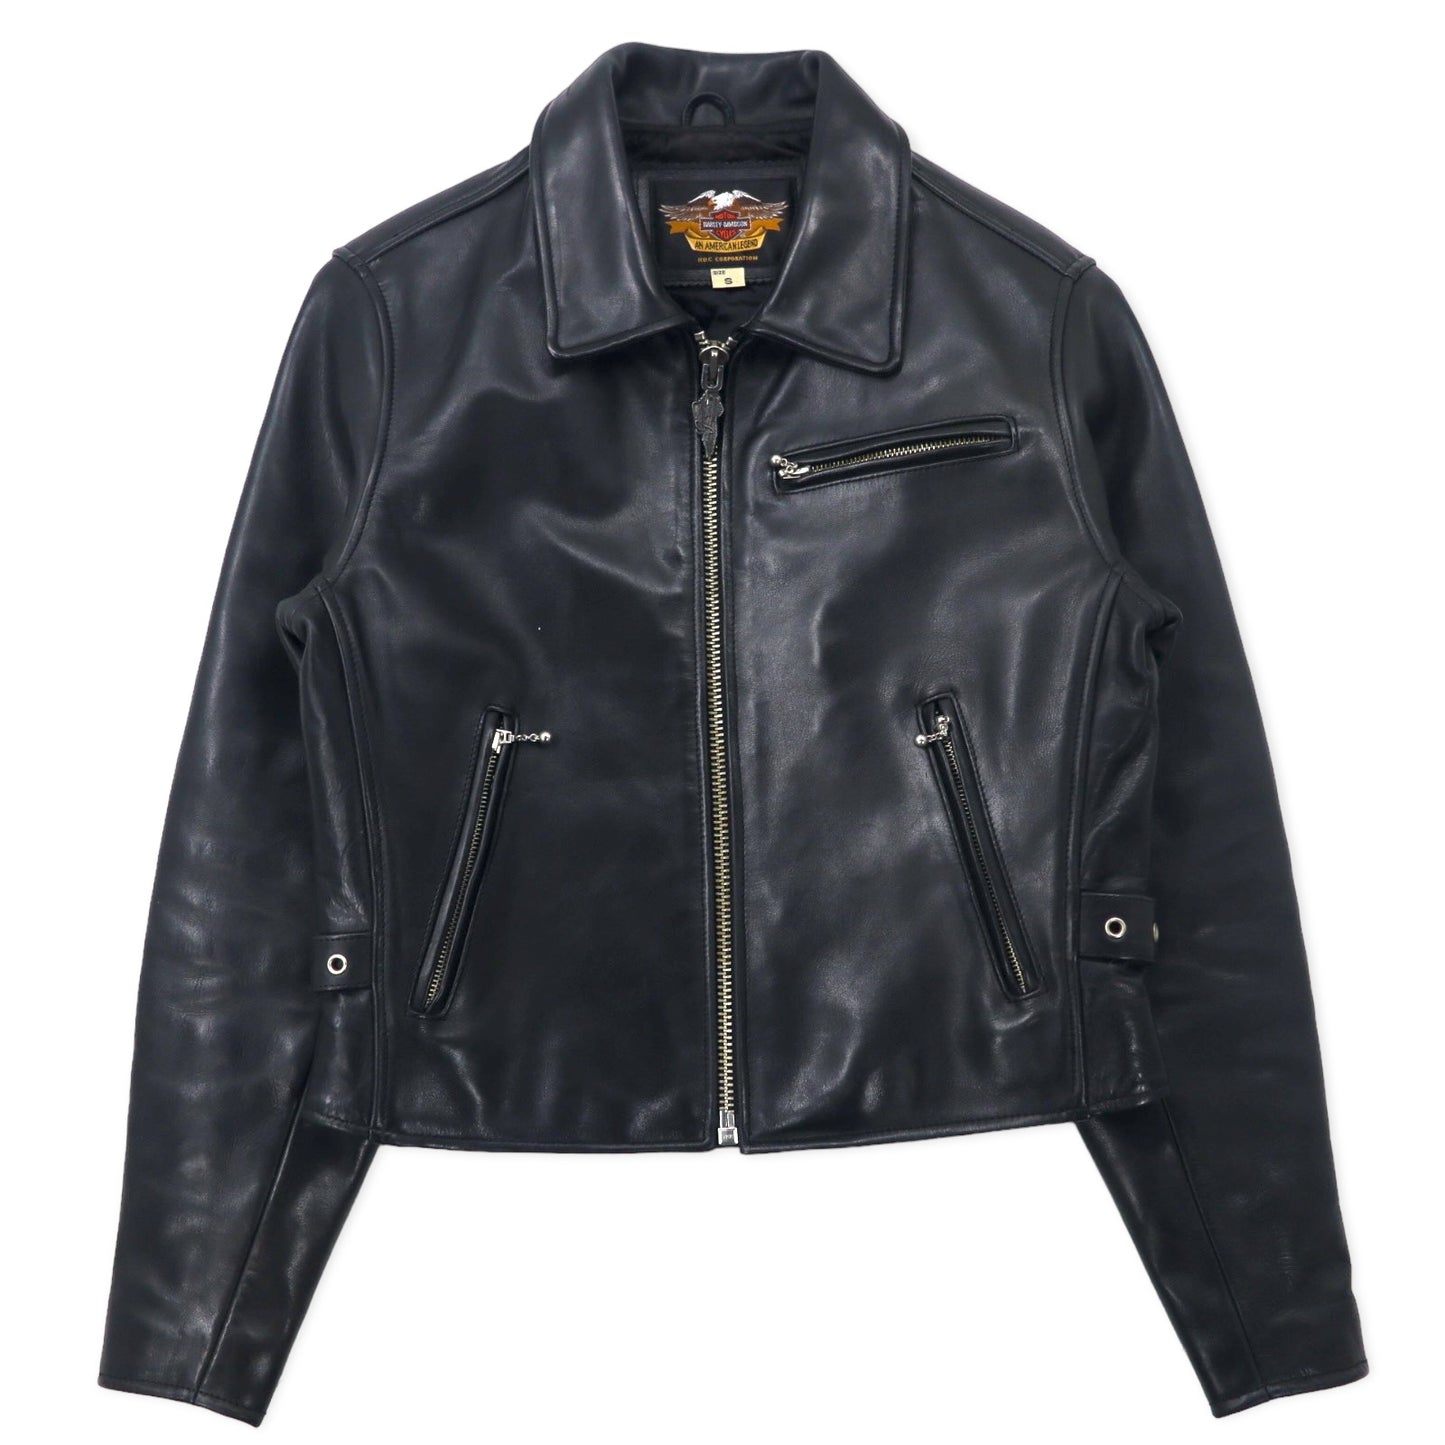 HARLEY DAVIDSON Single Riders Jacket Leather Jacket S Black Cowhide Quilted  Liner 40181